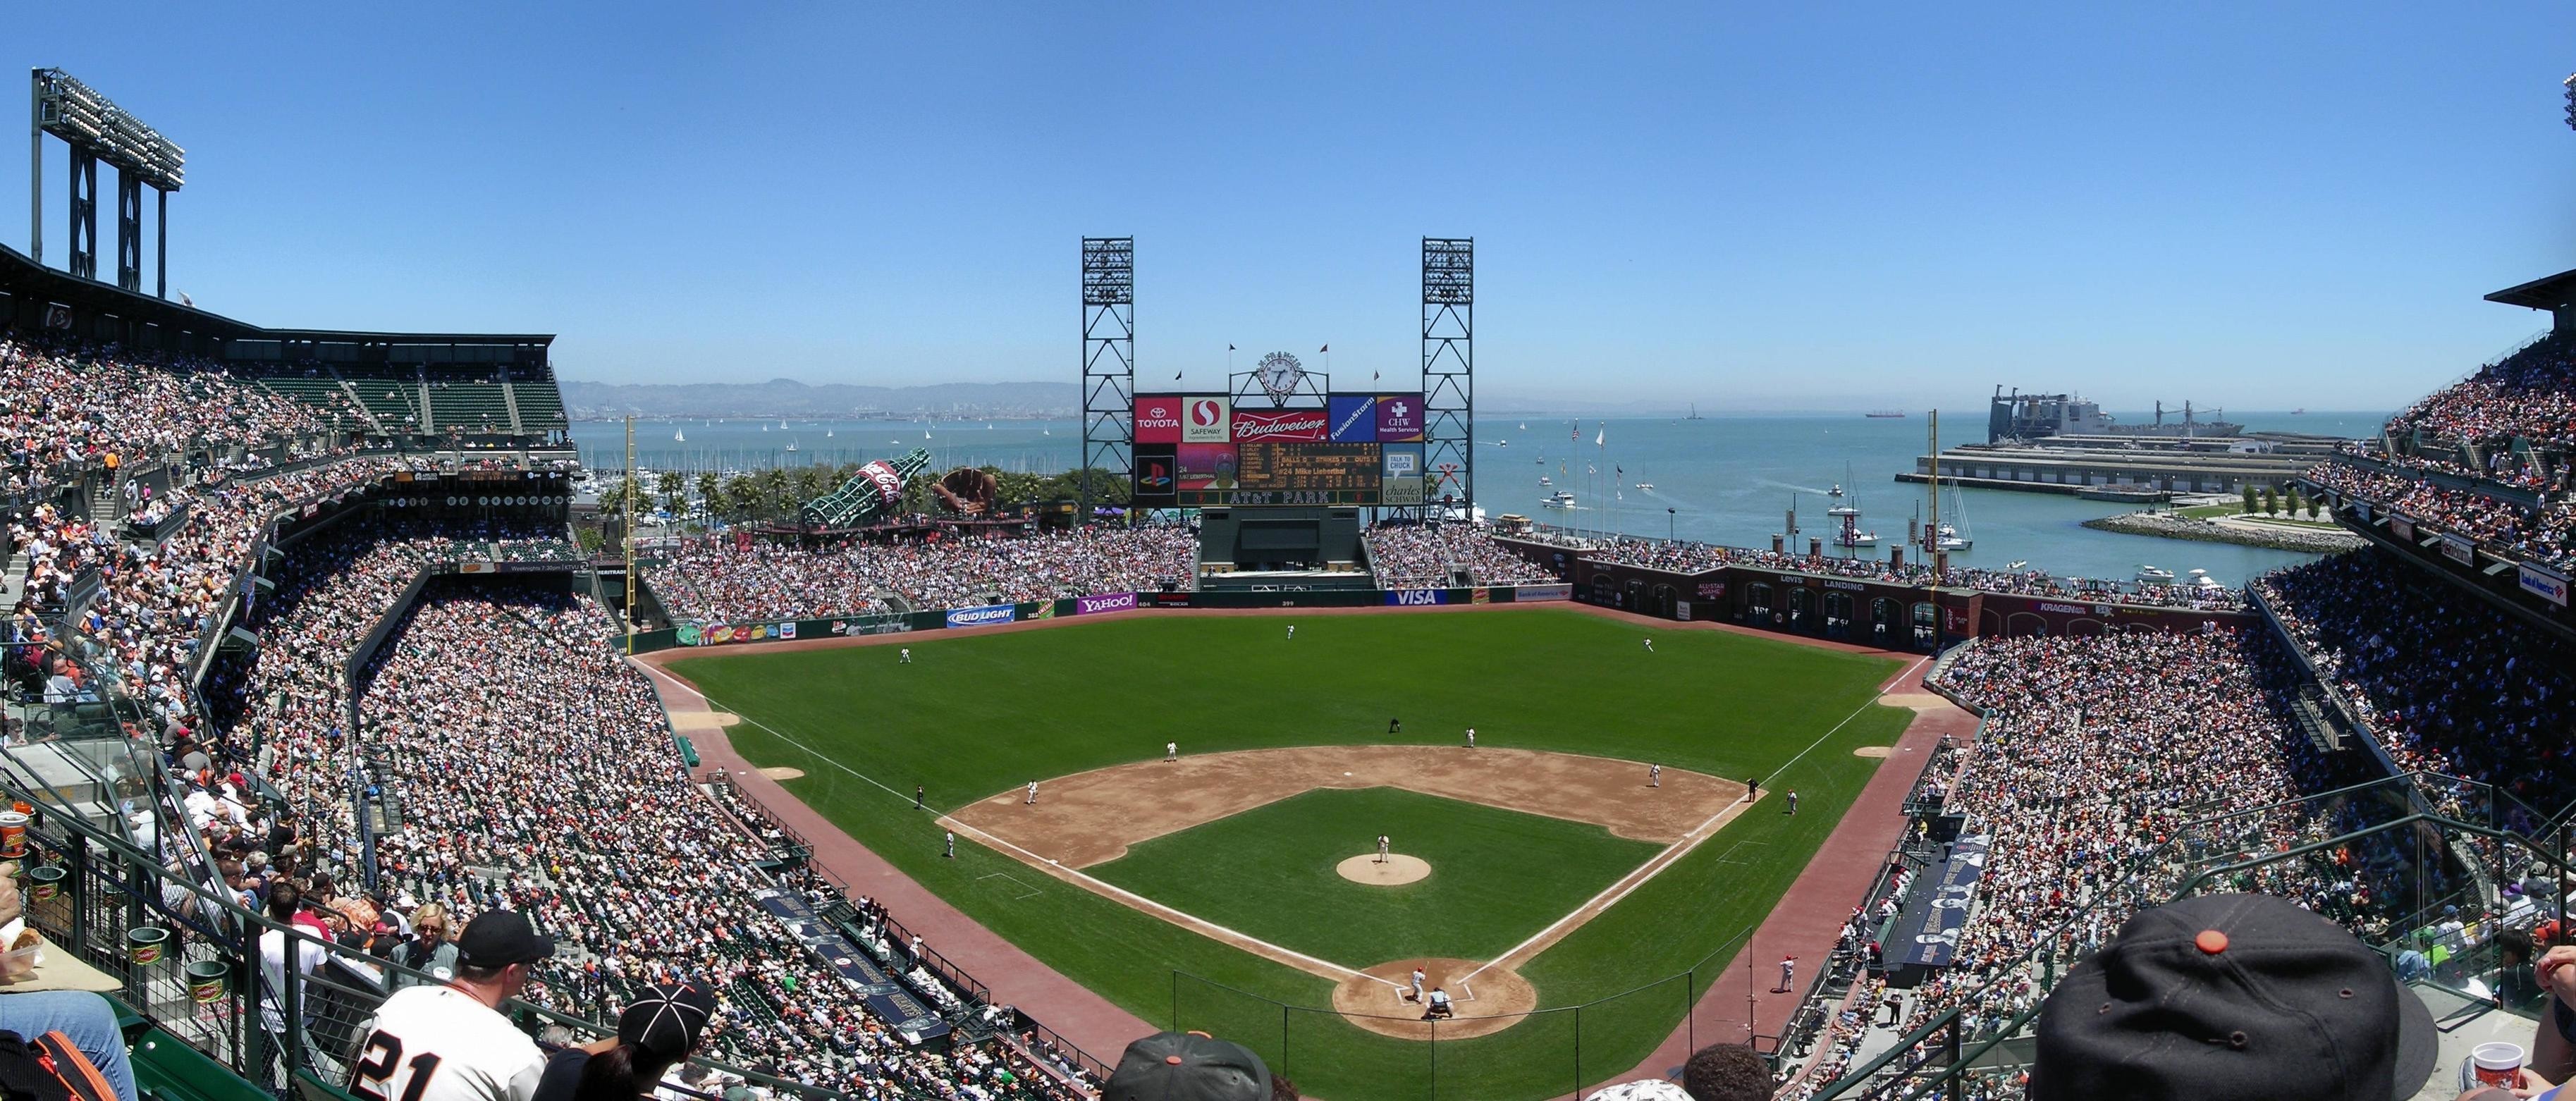 Att Park San Francisco Giants Baseball Stadium iPhone Wallpaper